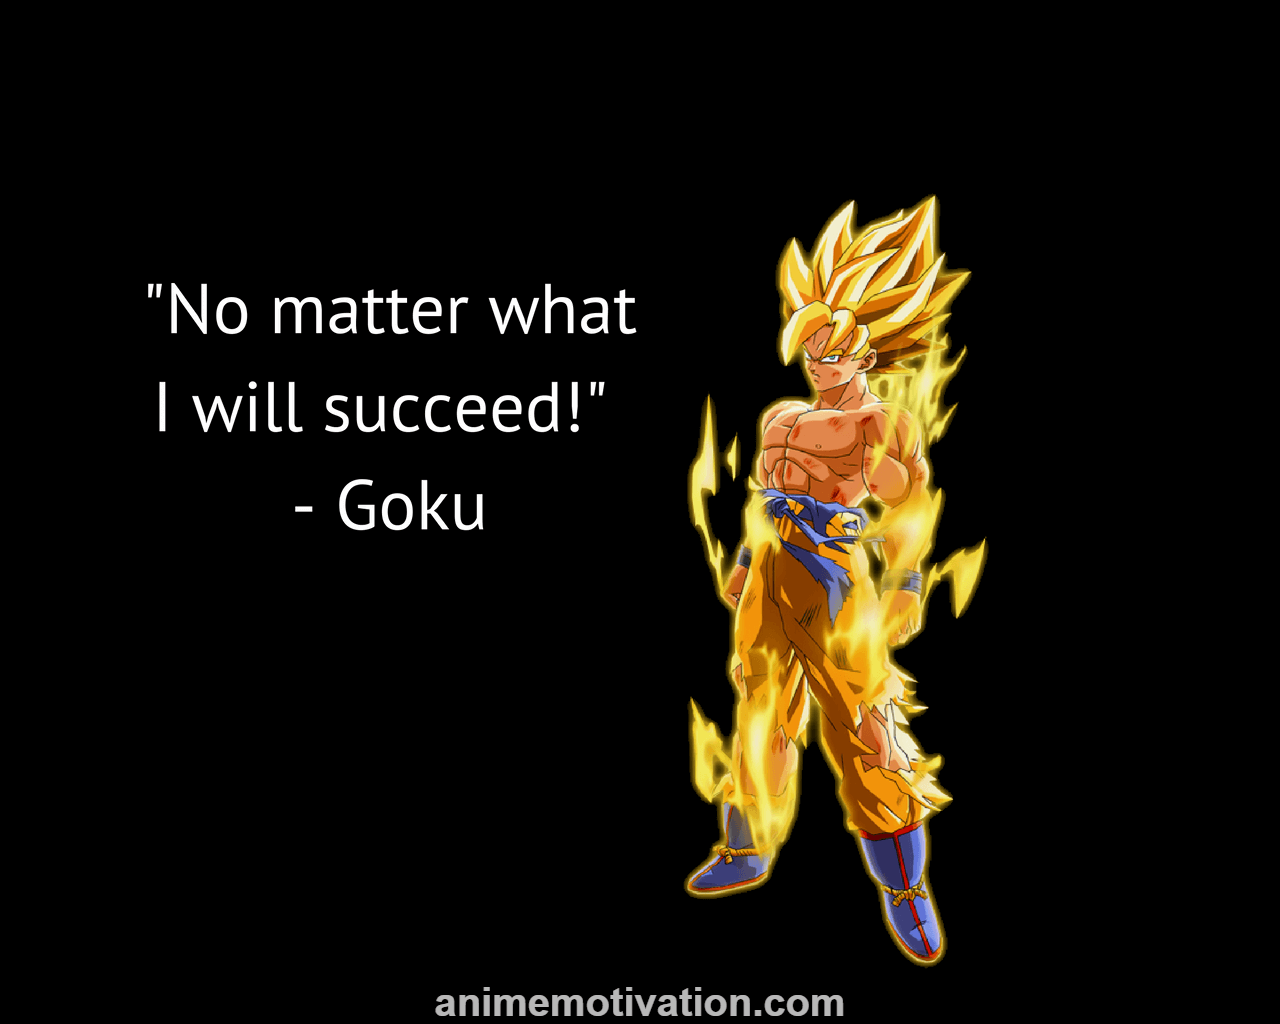 Inspirational Anime Wallpaper You Need To Download. Goku quotes, Anime wallpaper, Wallpaper quotes